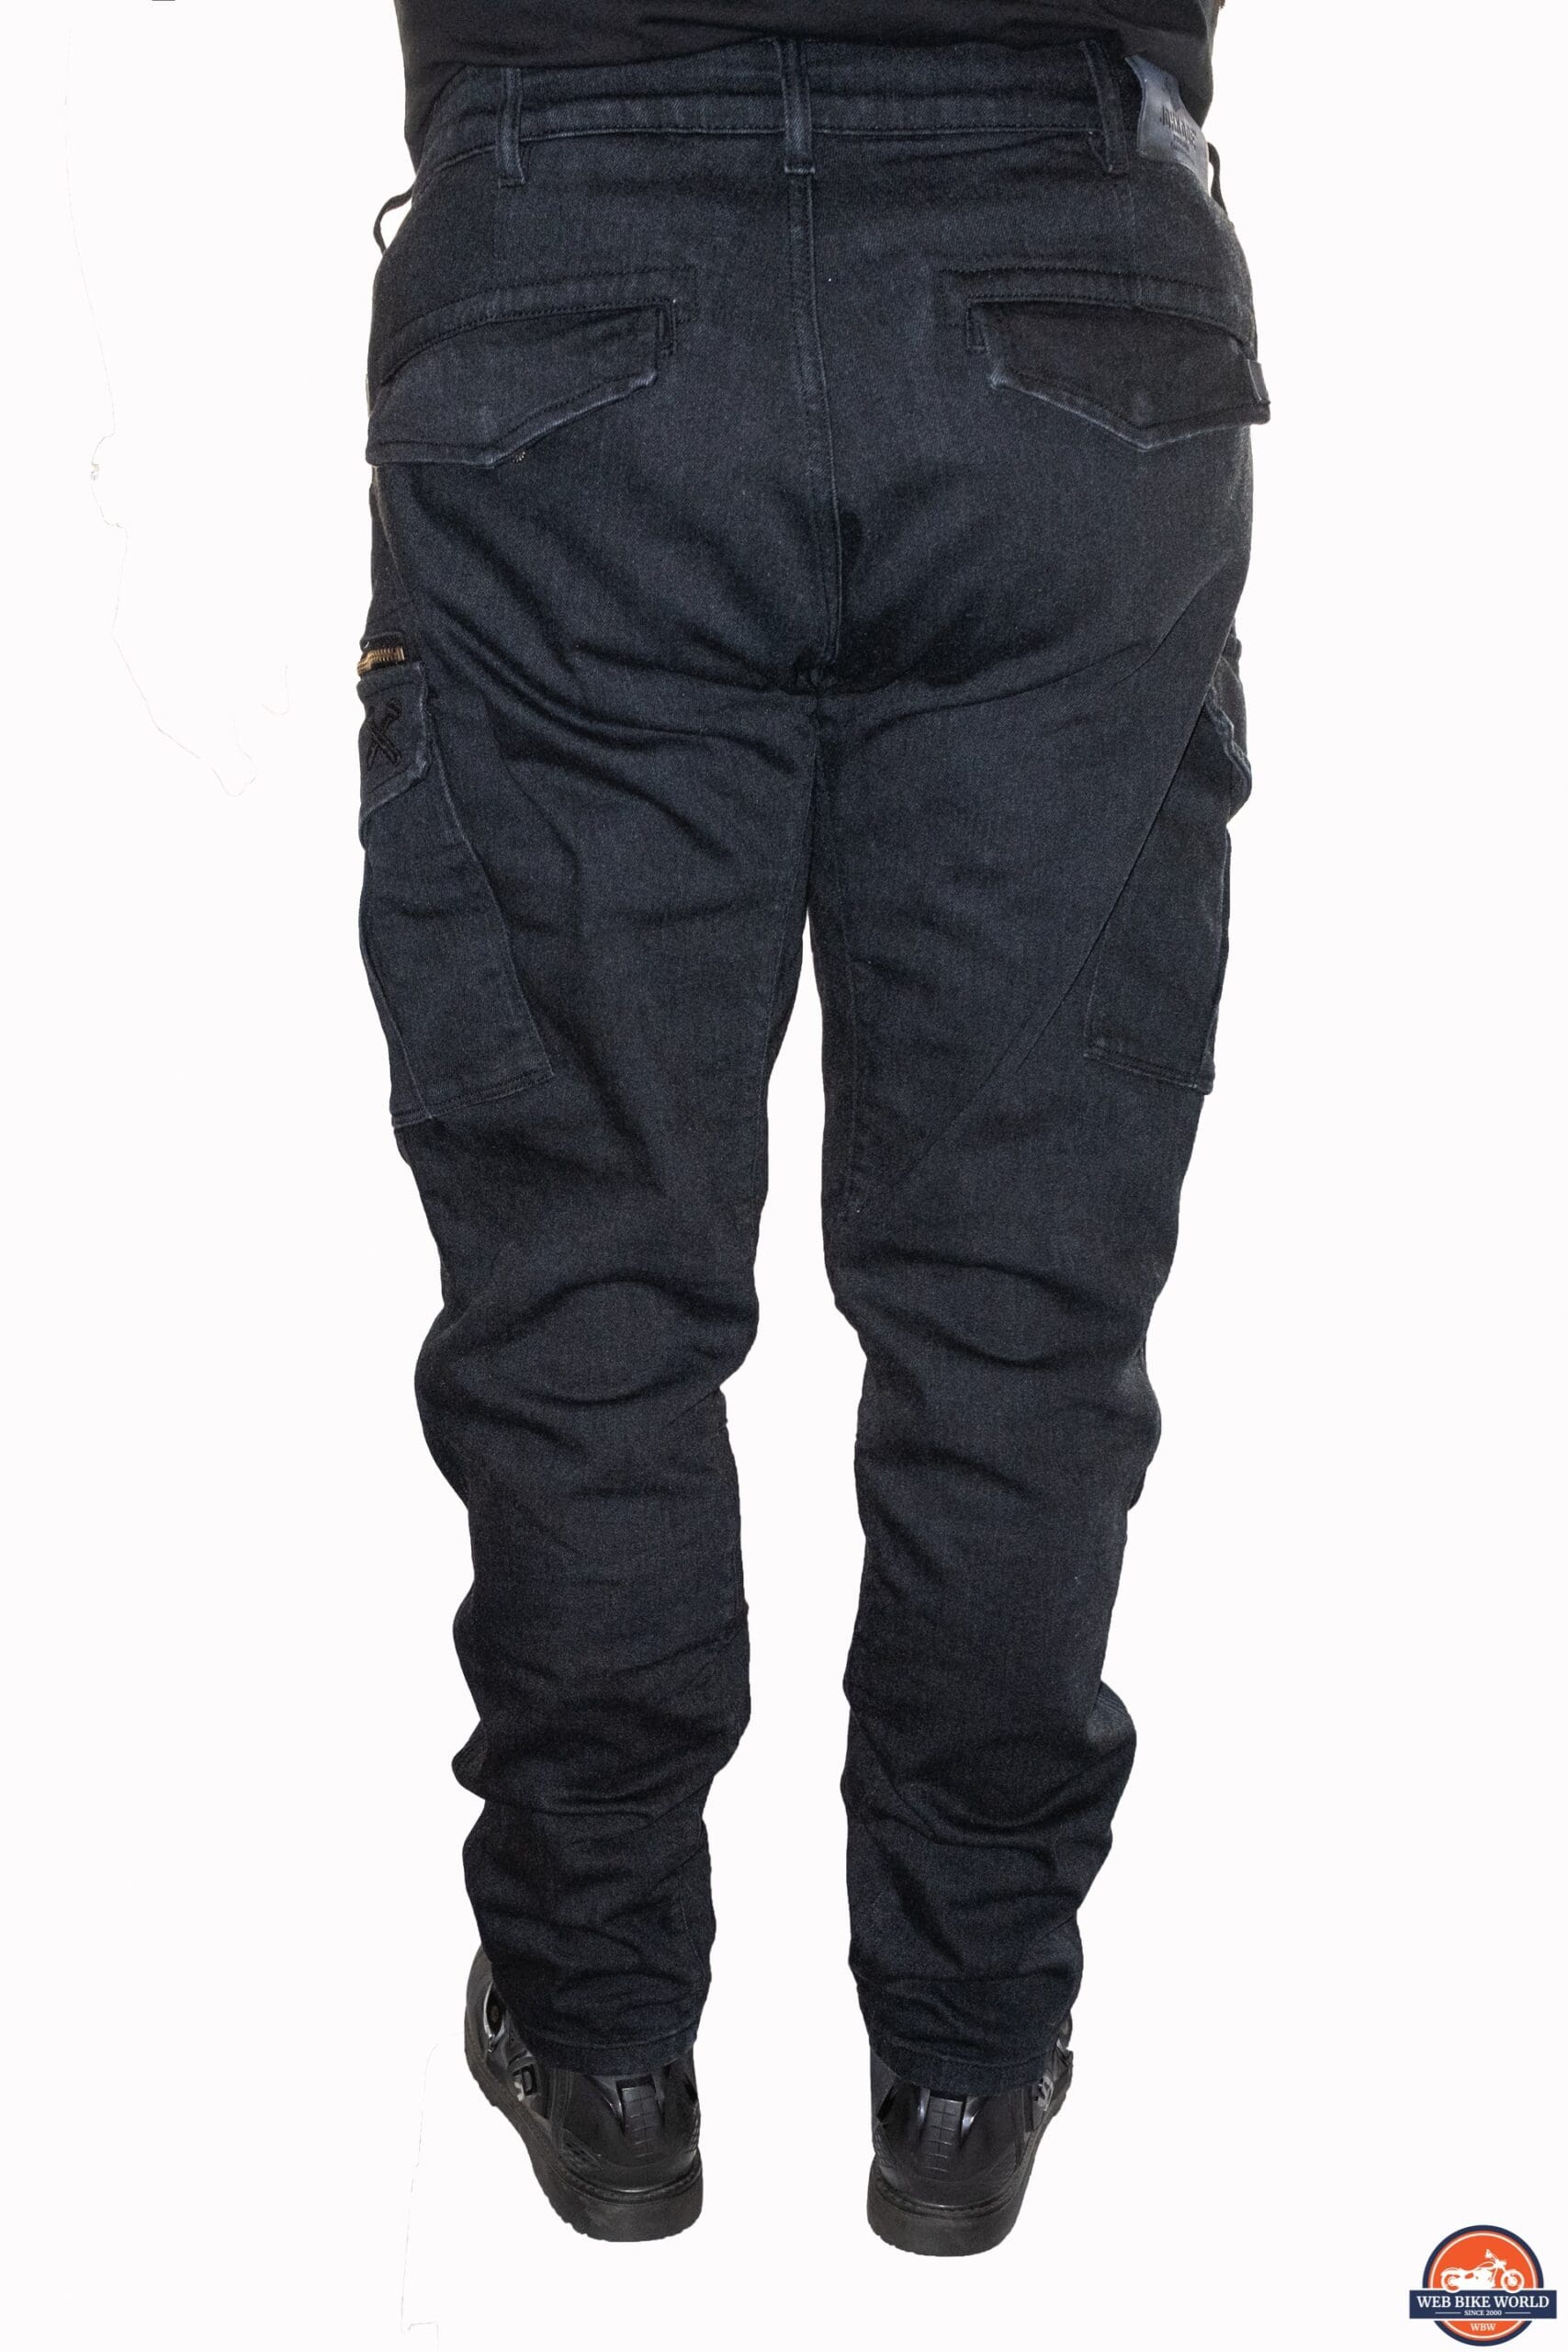 Mens Motorcycle Biker Jeans Pocket Cargo Combat Trousers Slim Fit Casual  Pants | eBay